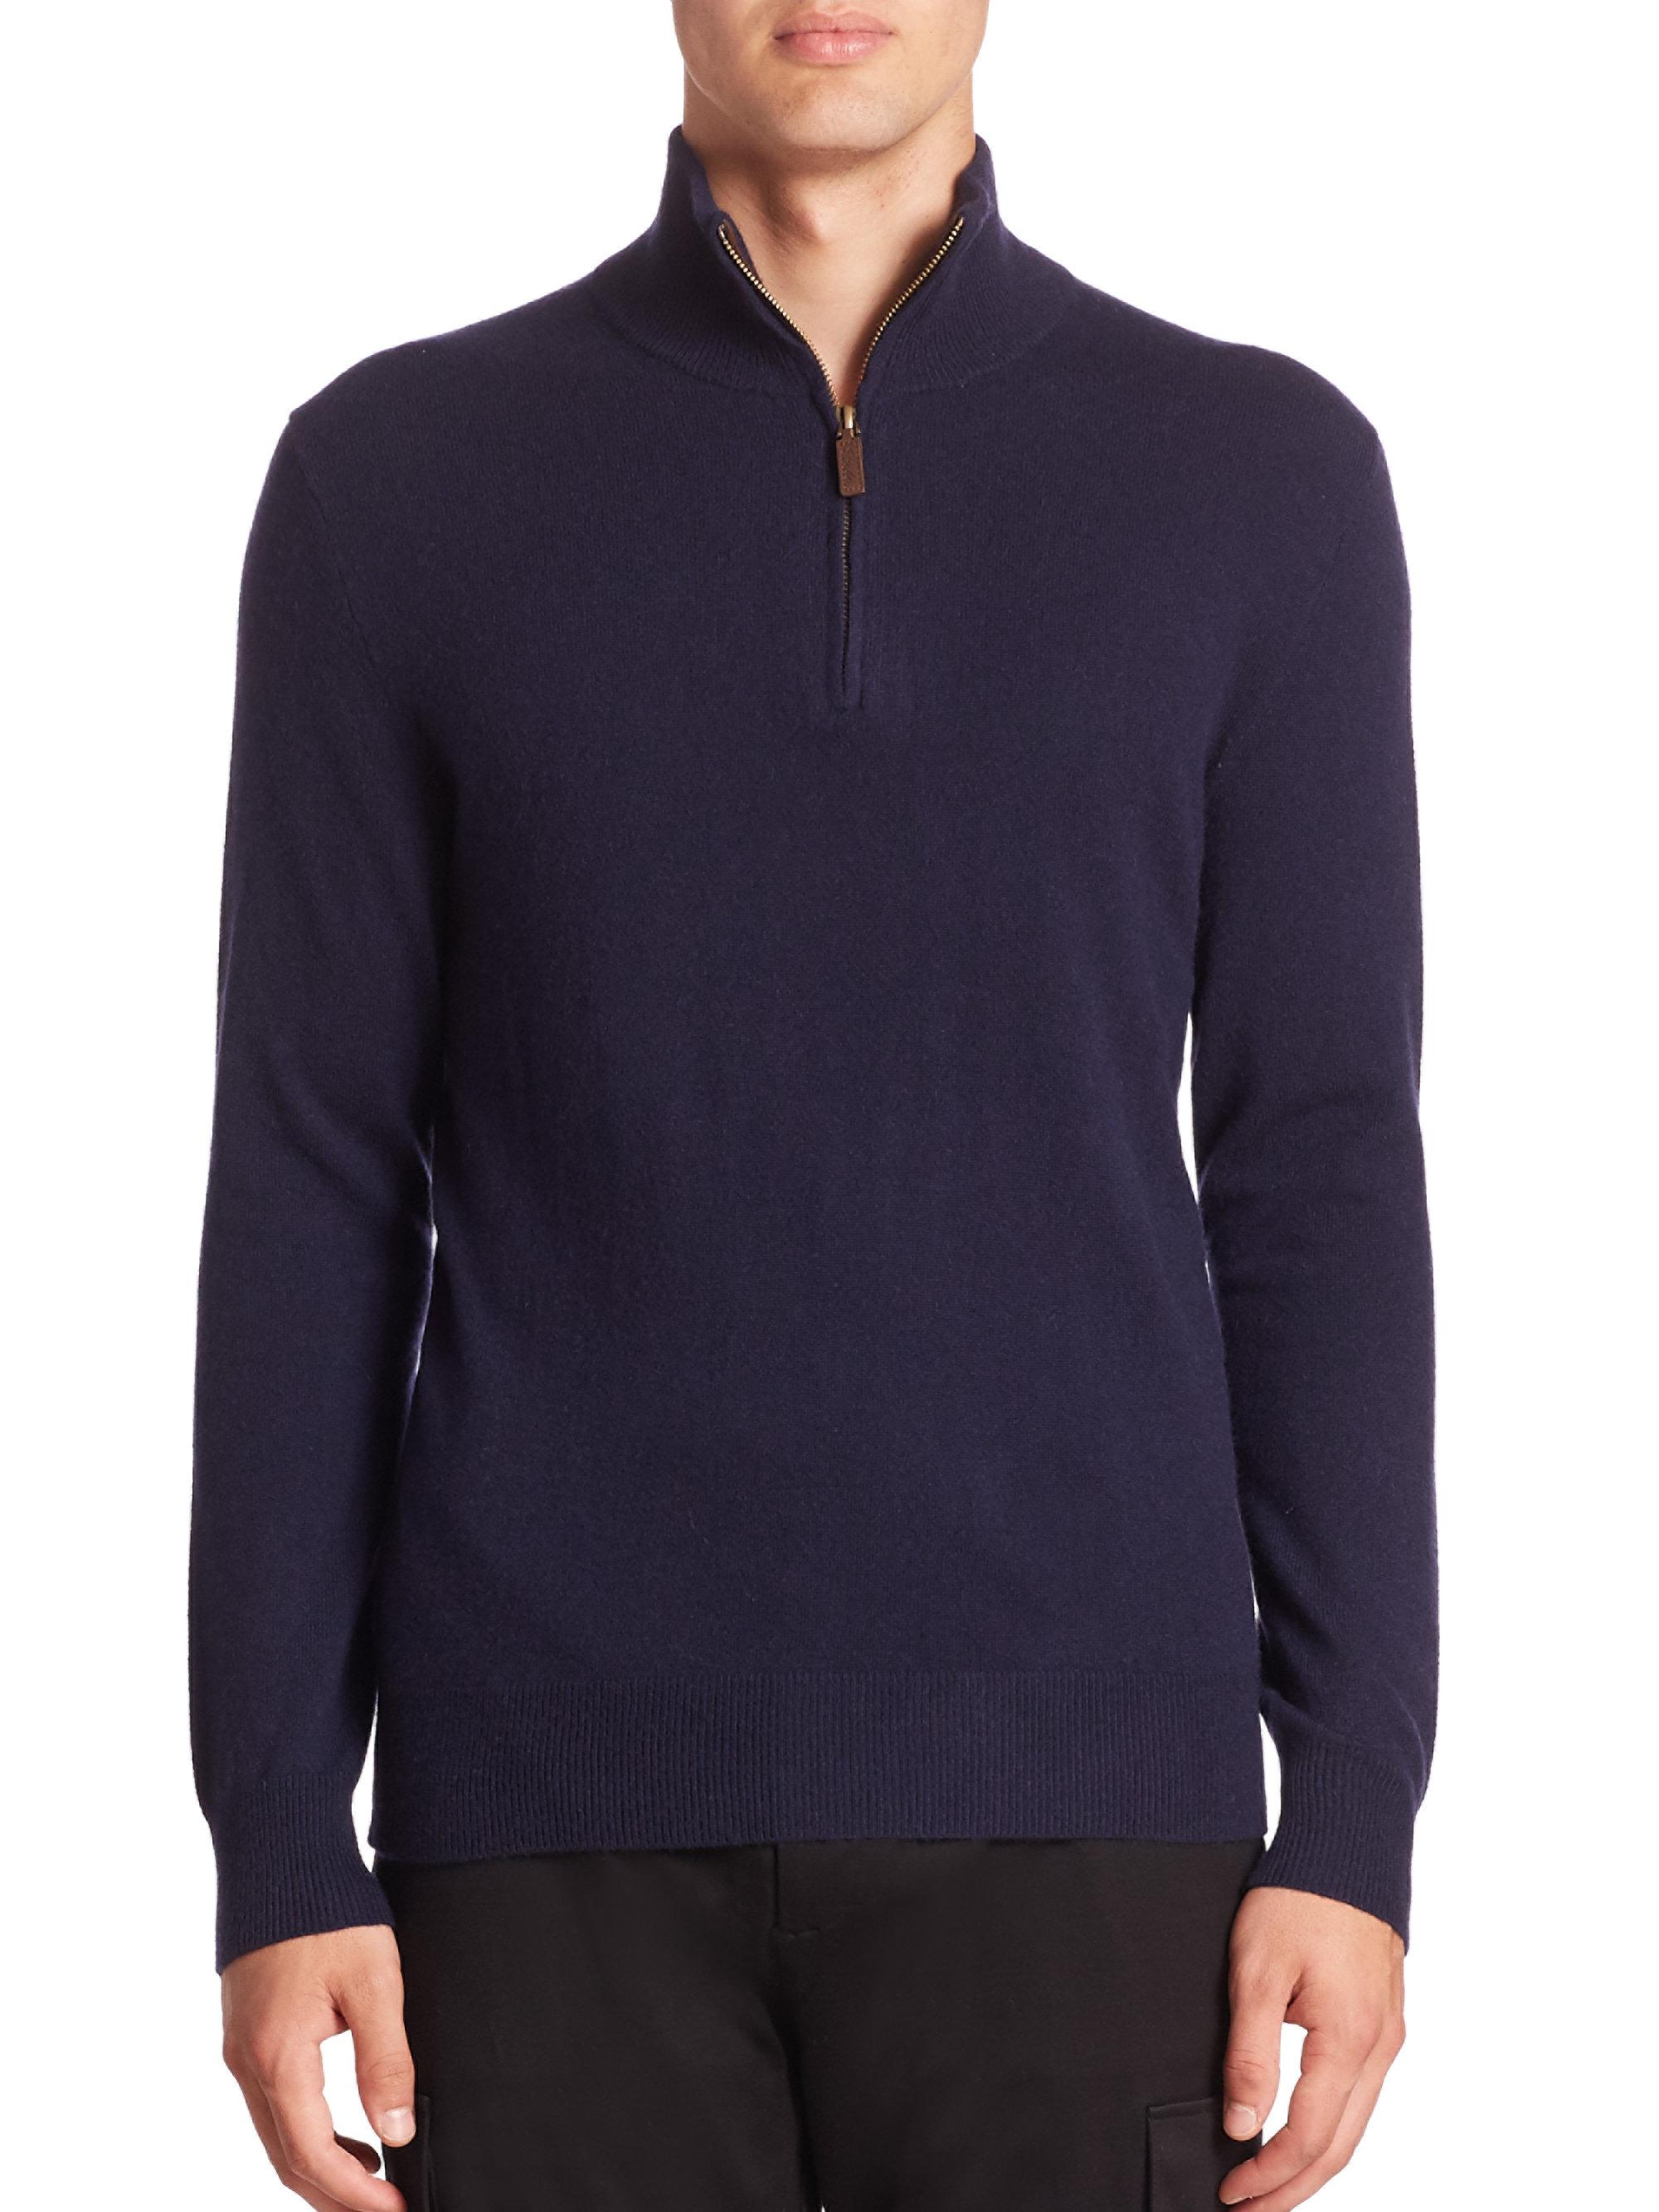 Lyst - Polo Ralph Lauren Cashmere Half-zip Pullover Sweater in Blue for Men